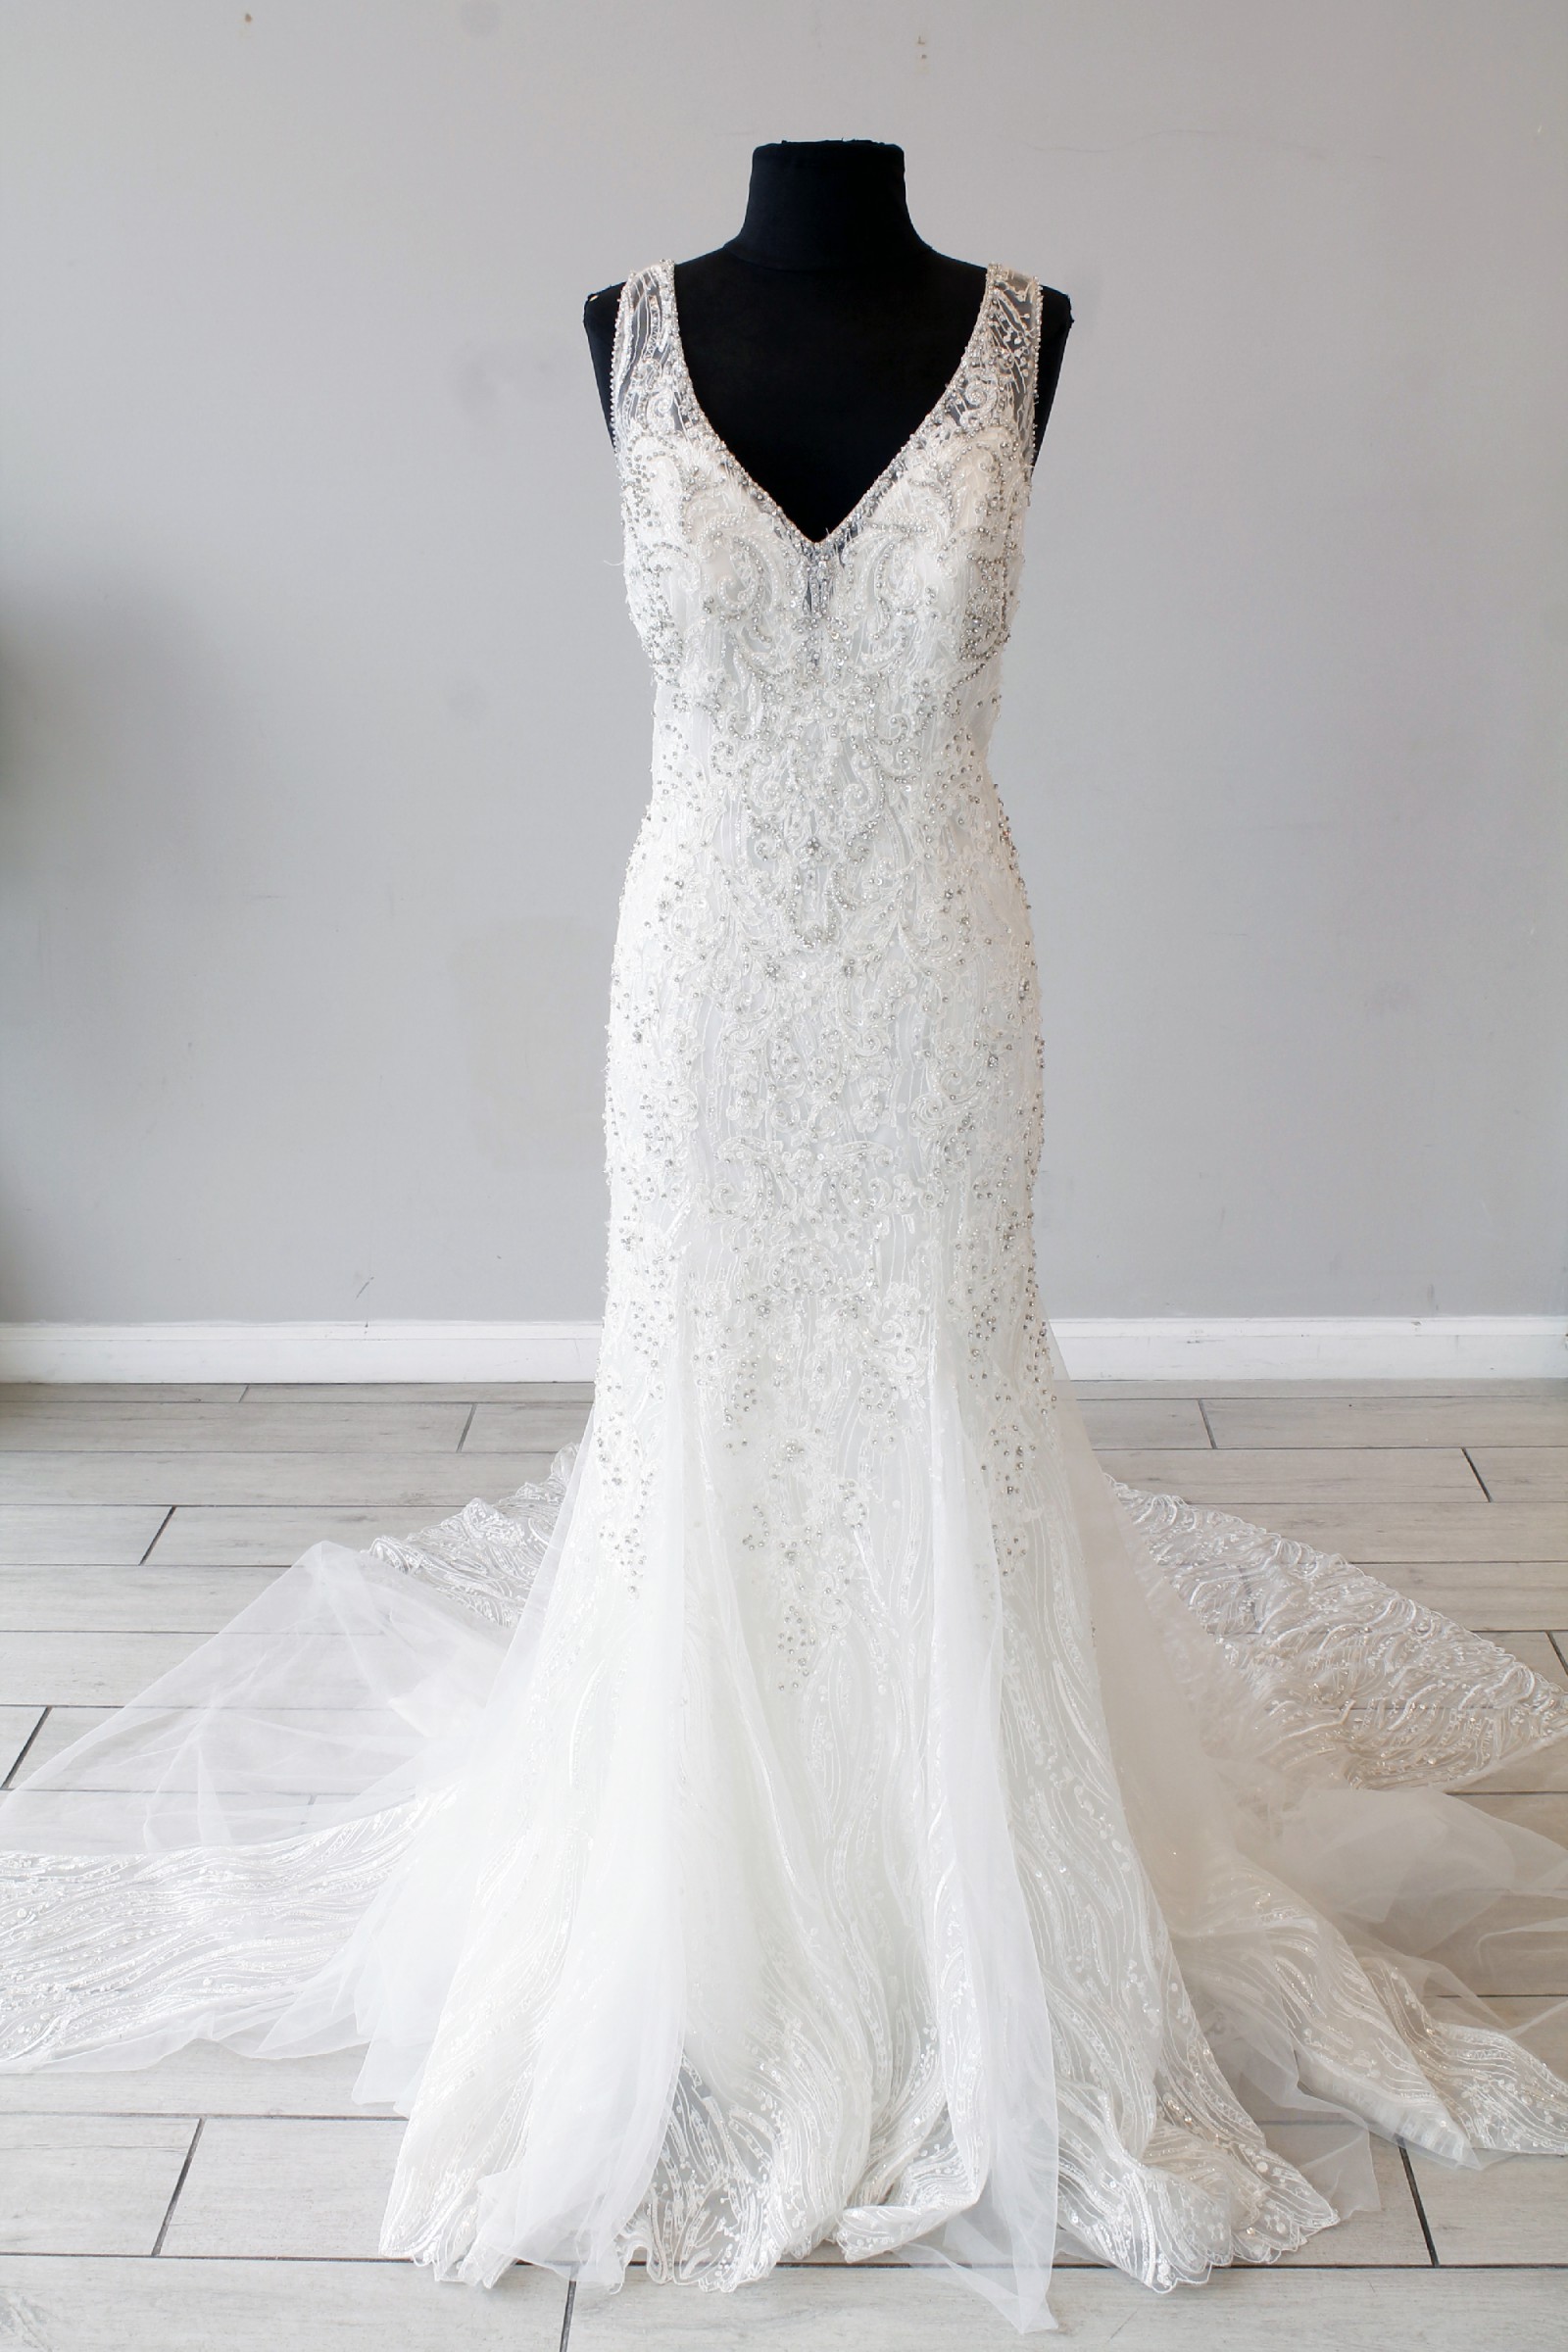 Allure Couture C415 Sample Wedding Dress Save 30% - Stillwhite